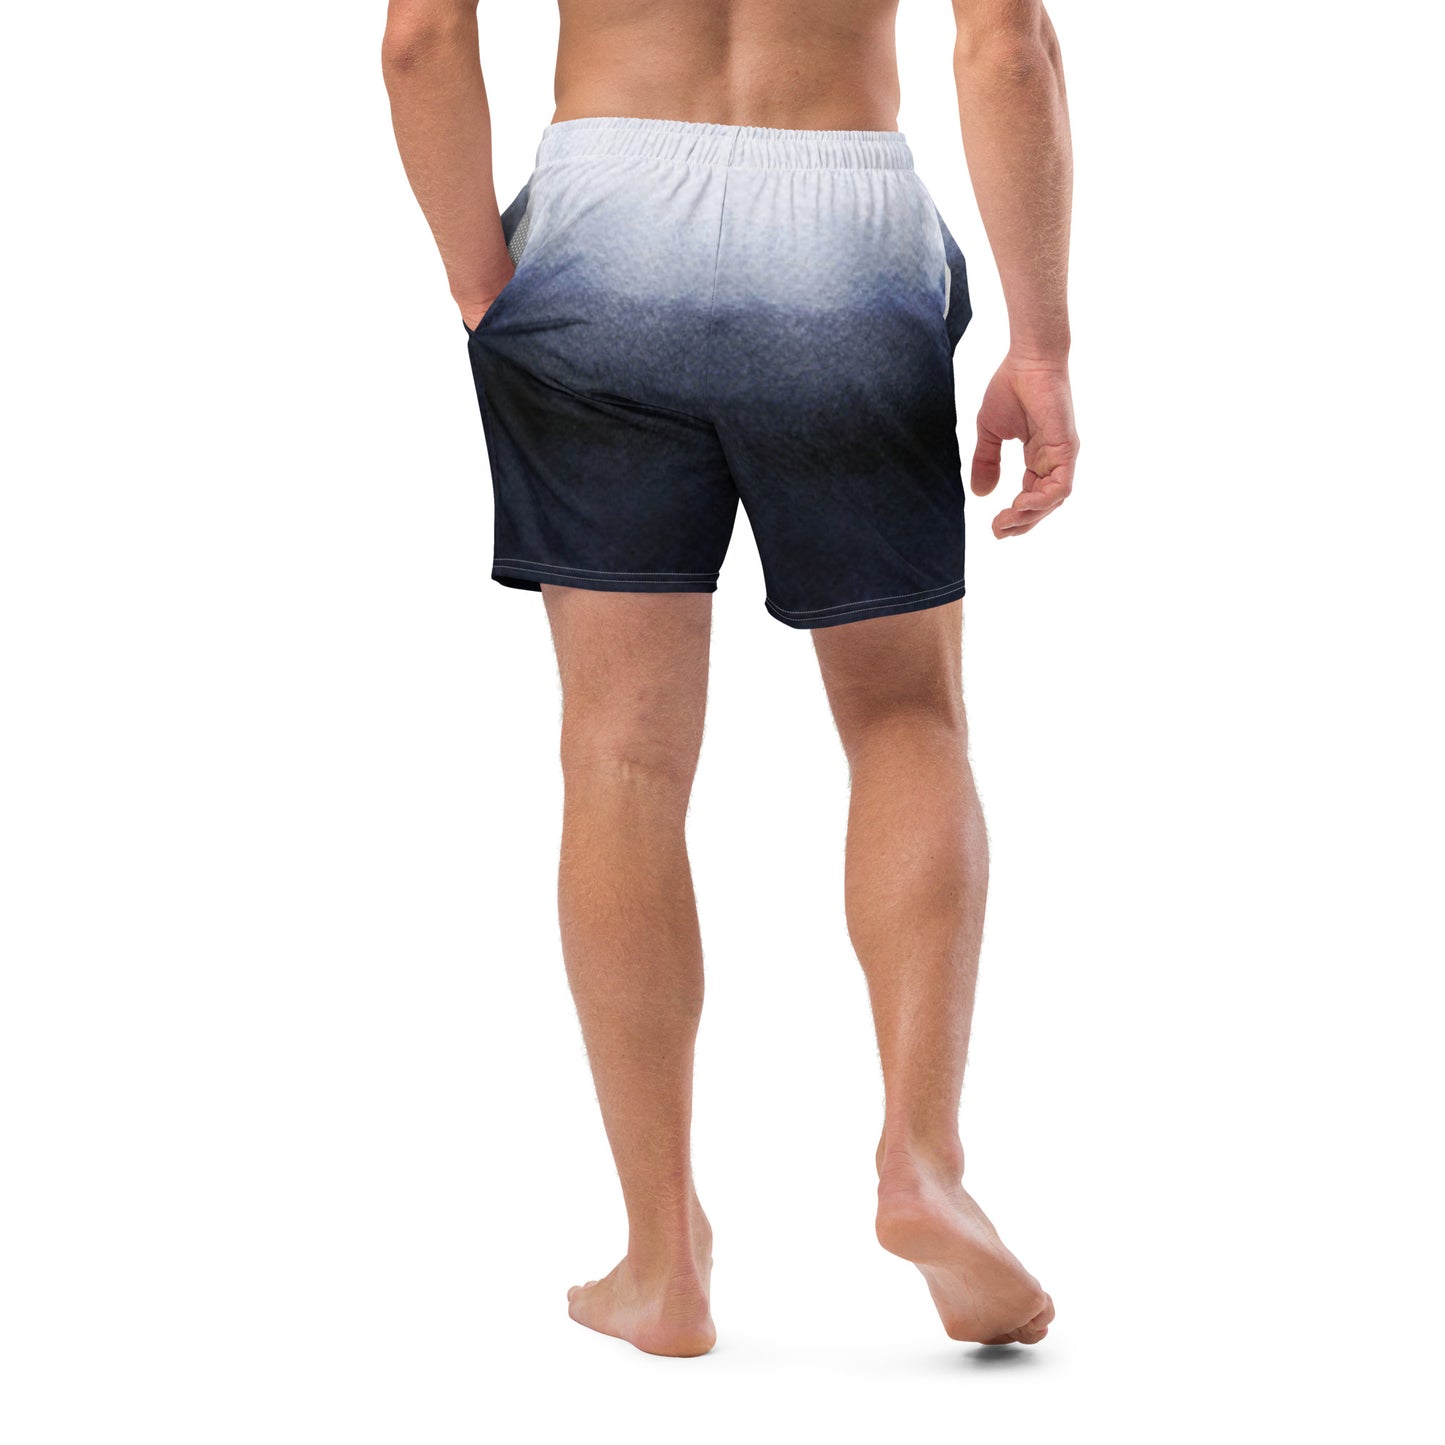 Humble Sportswear, men's breathable swim trunks with pockets, mesh inner lining swim shorts